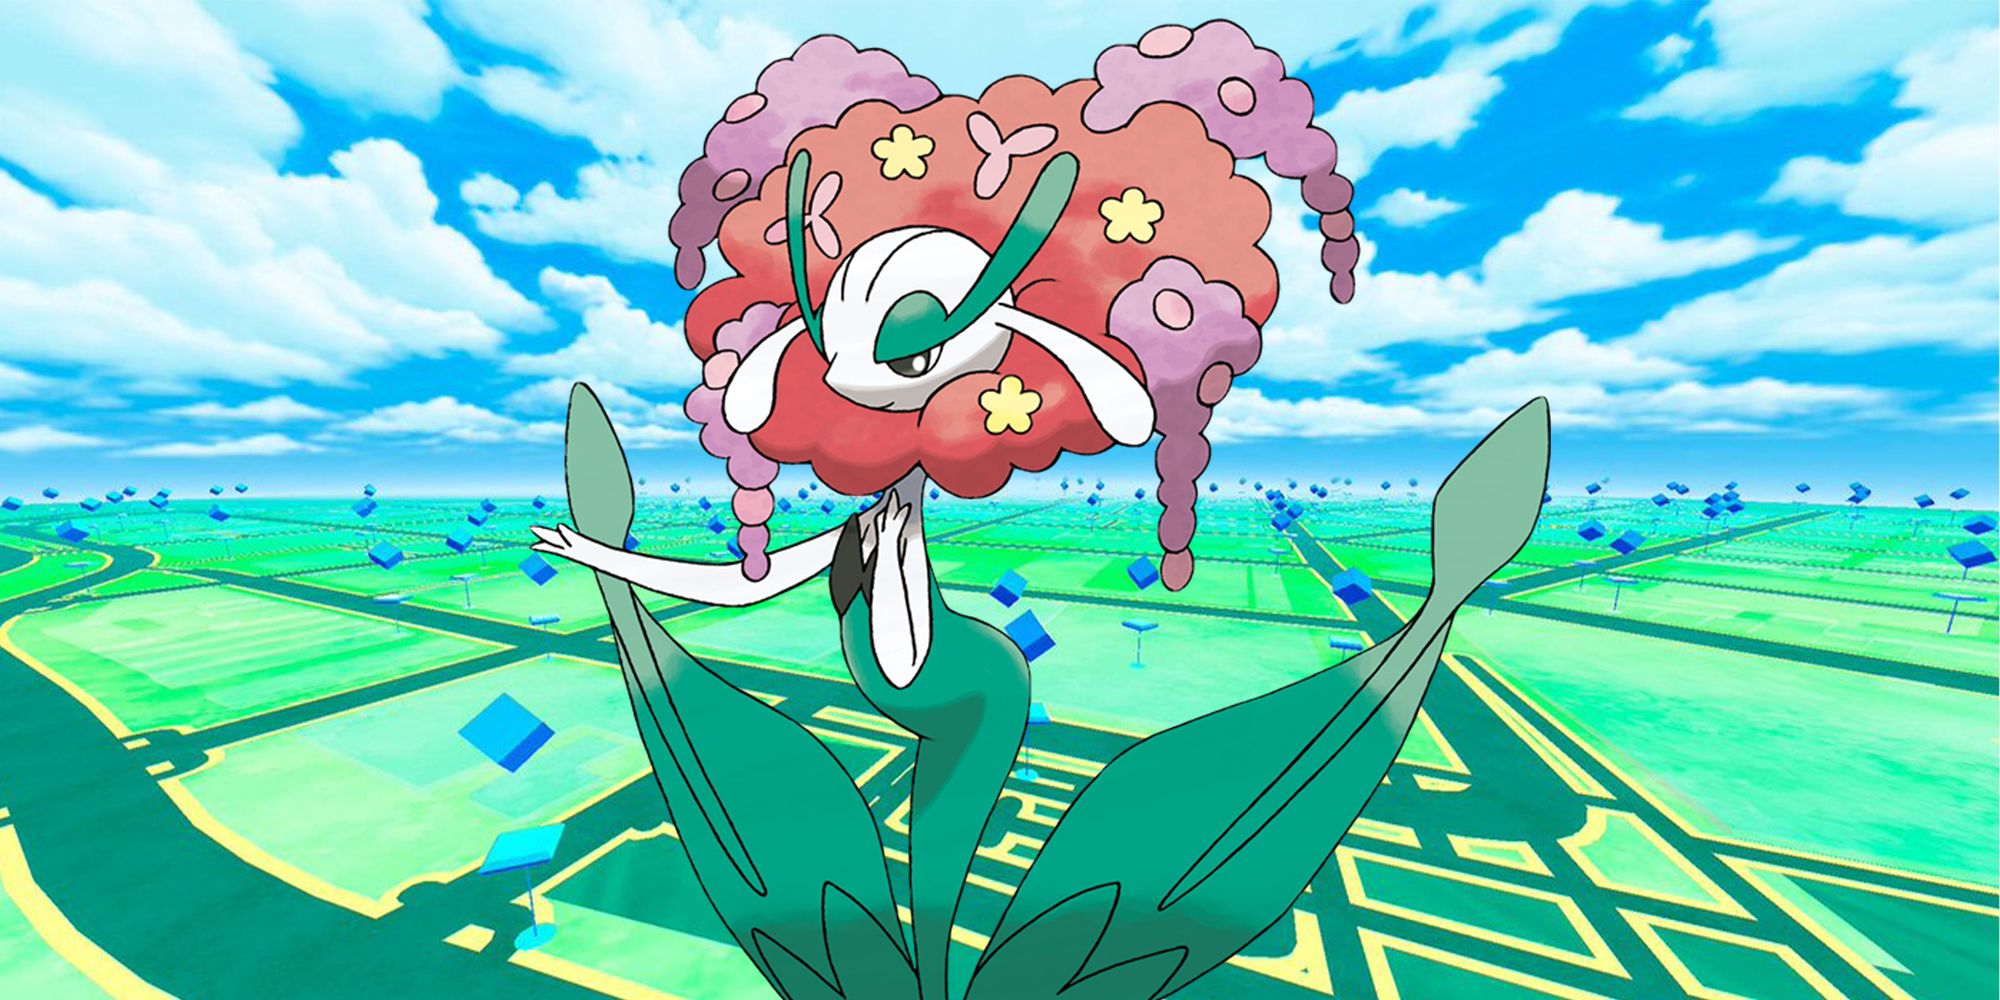 Florges hovers above a green landscape in Pokémon